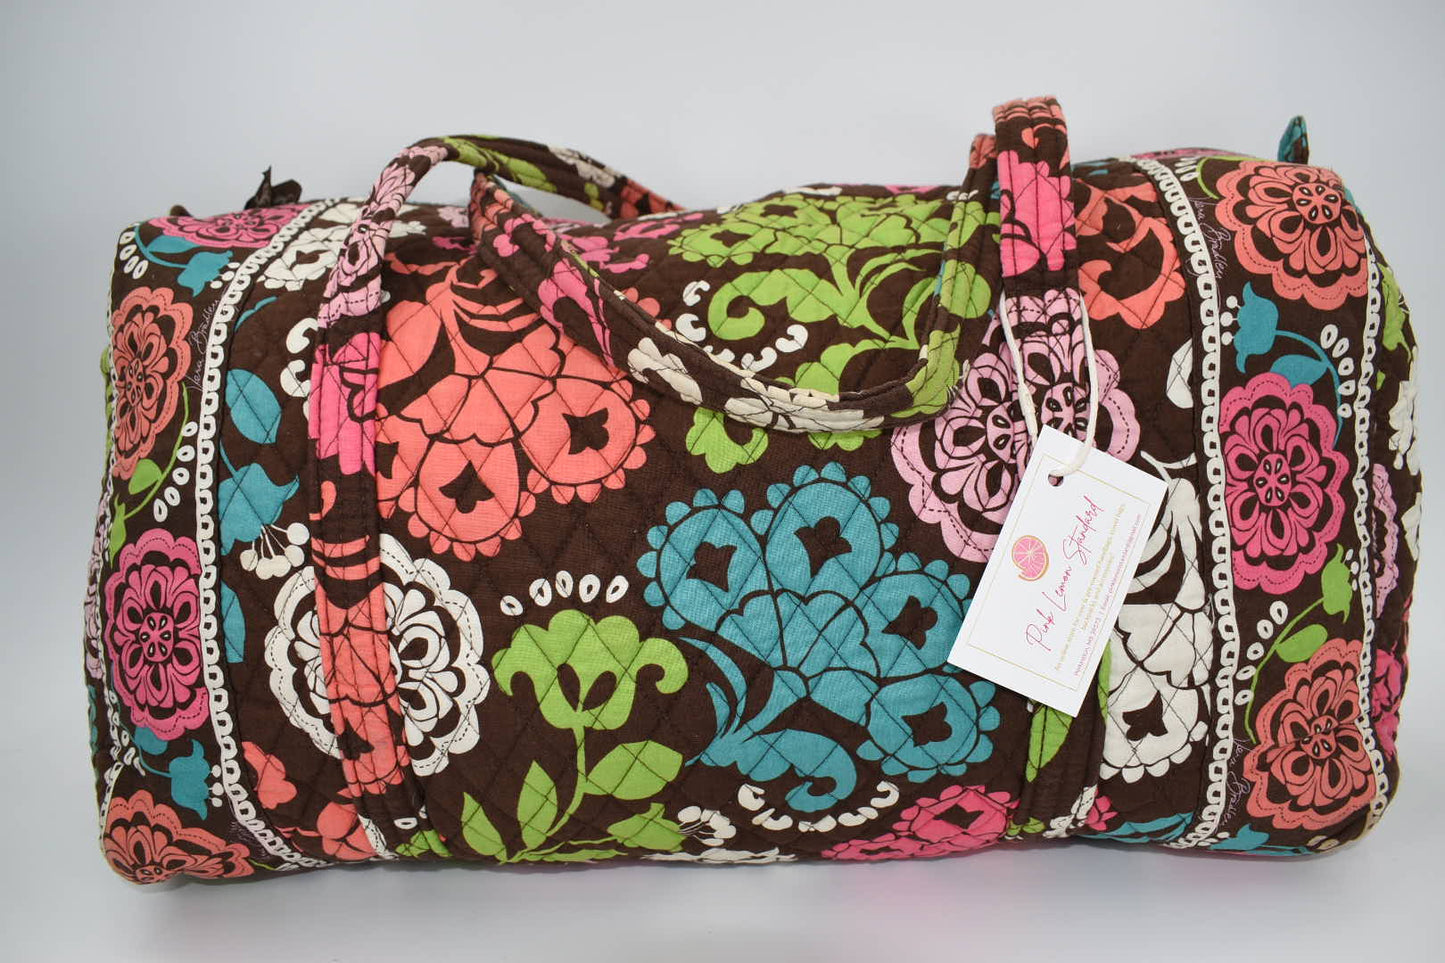 Vera Bradley Large Duffel Bag in "Lola" Pattern